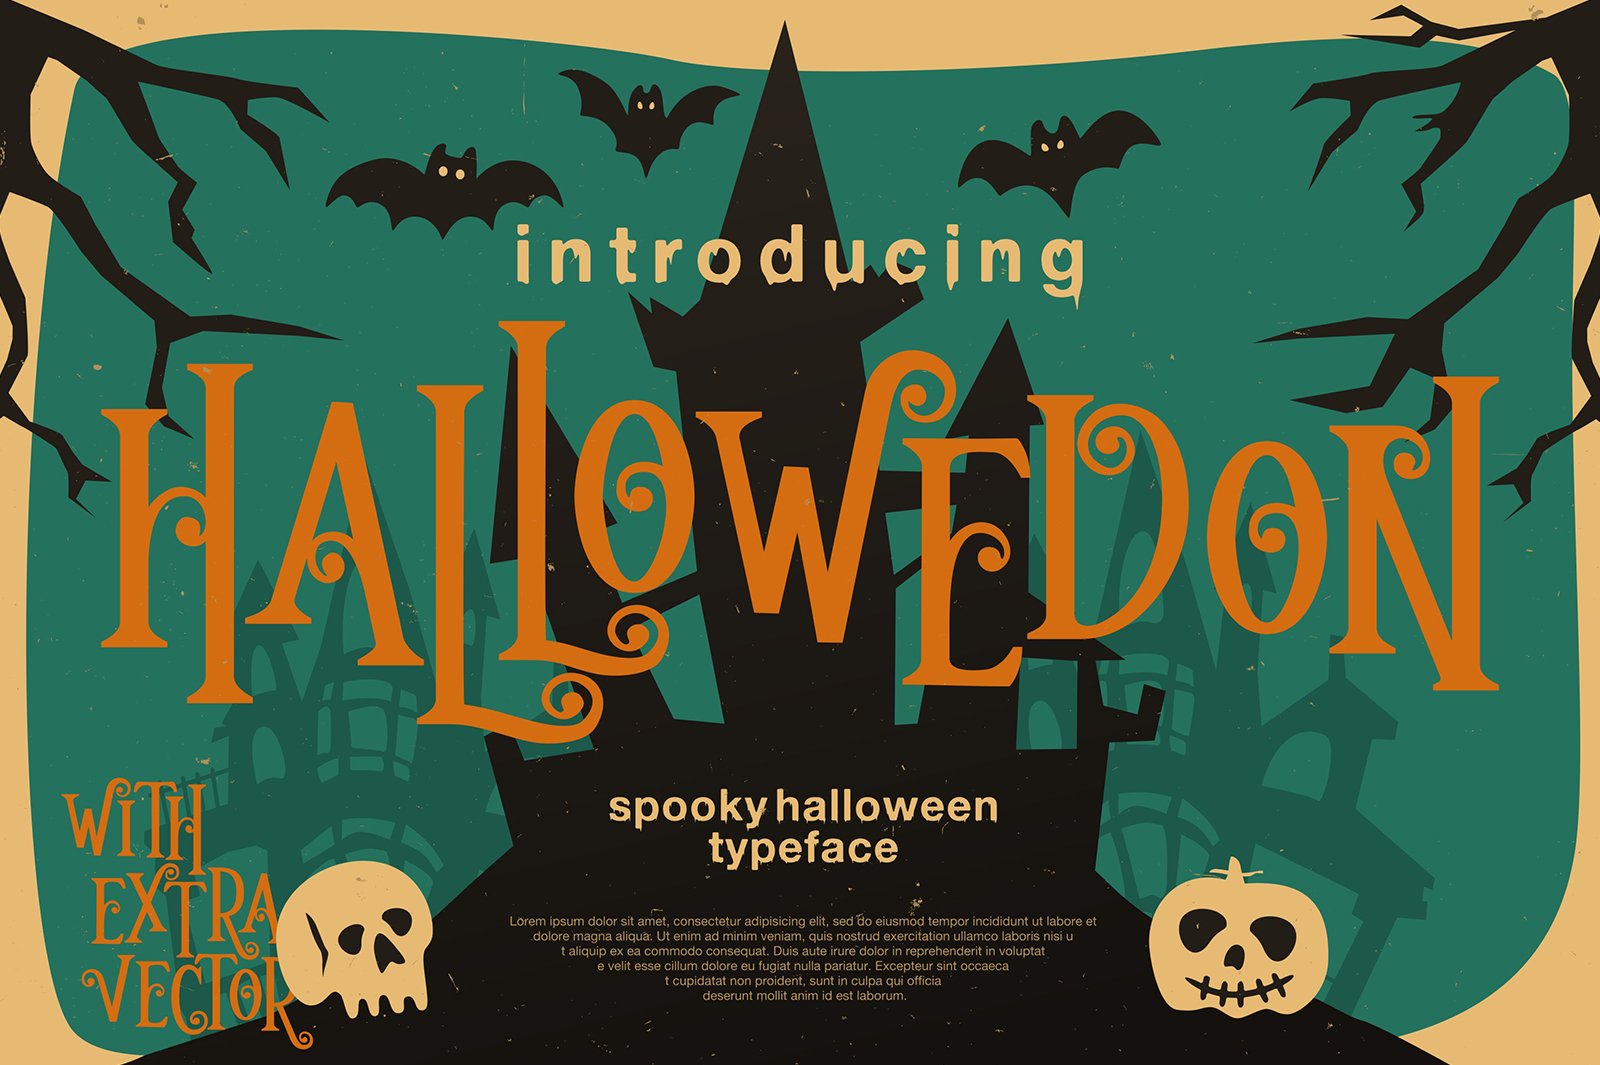 Hallowedon - Scary typeface cover image.